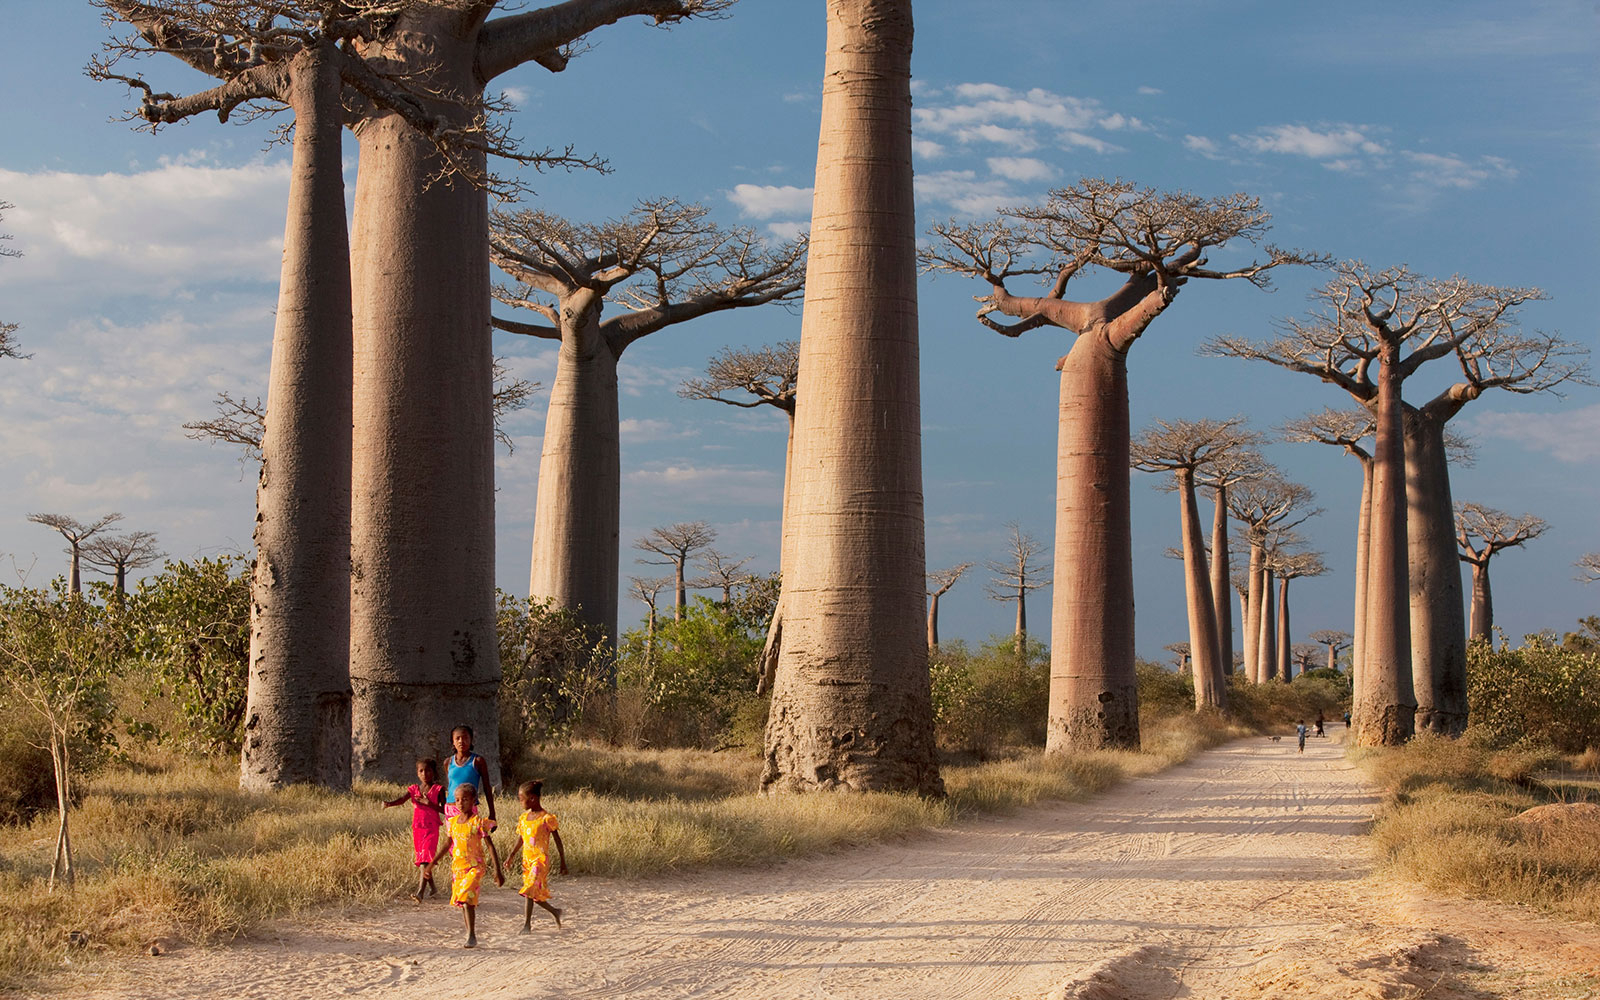 A group of young girls walk through Avenue of the Baobabs, near Morondava, Madagascar